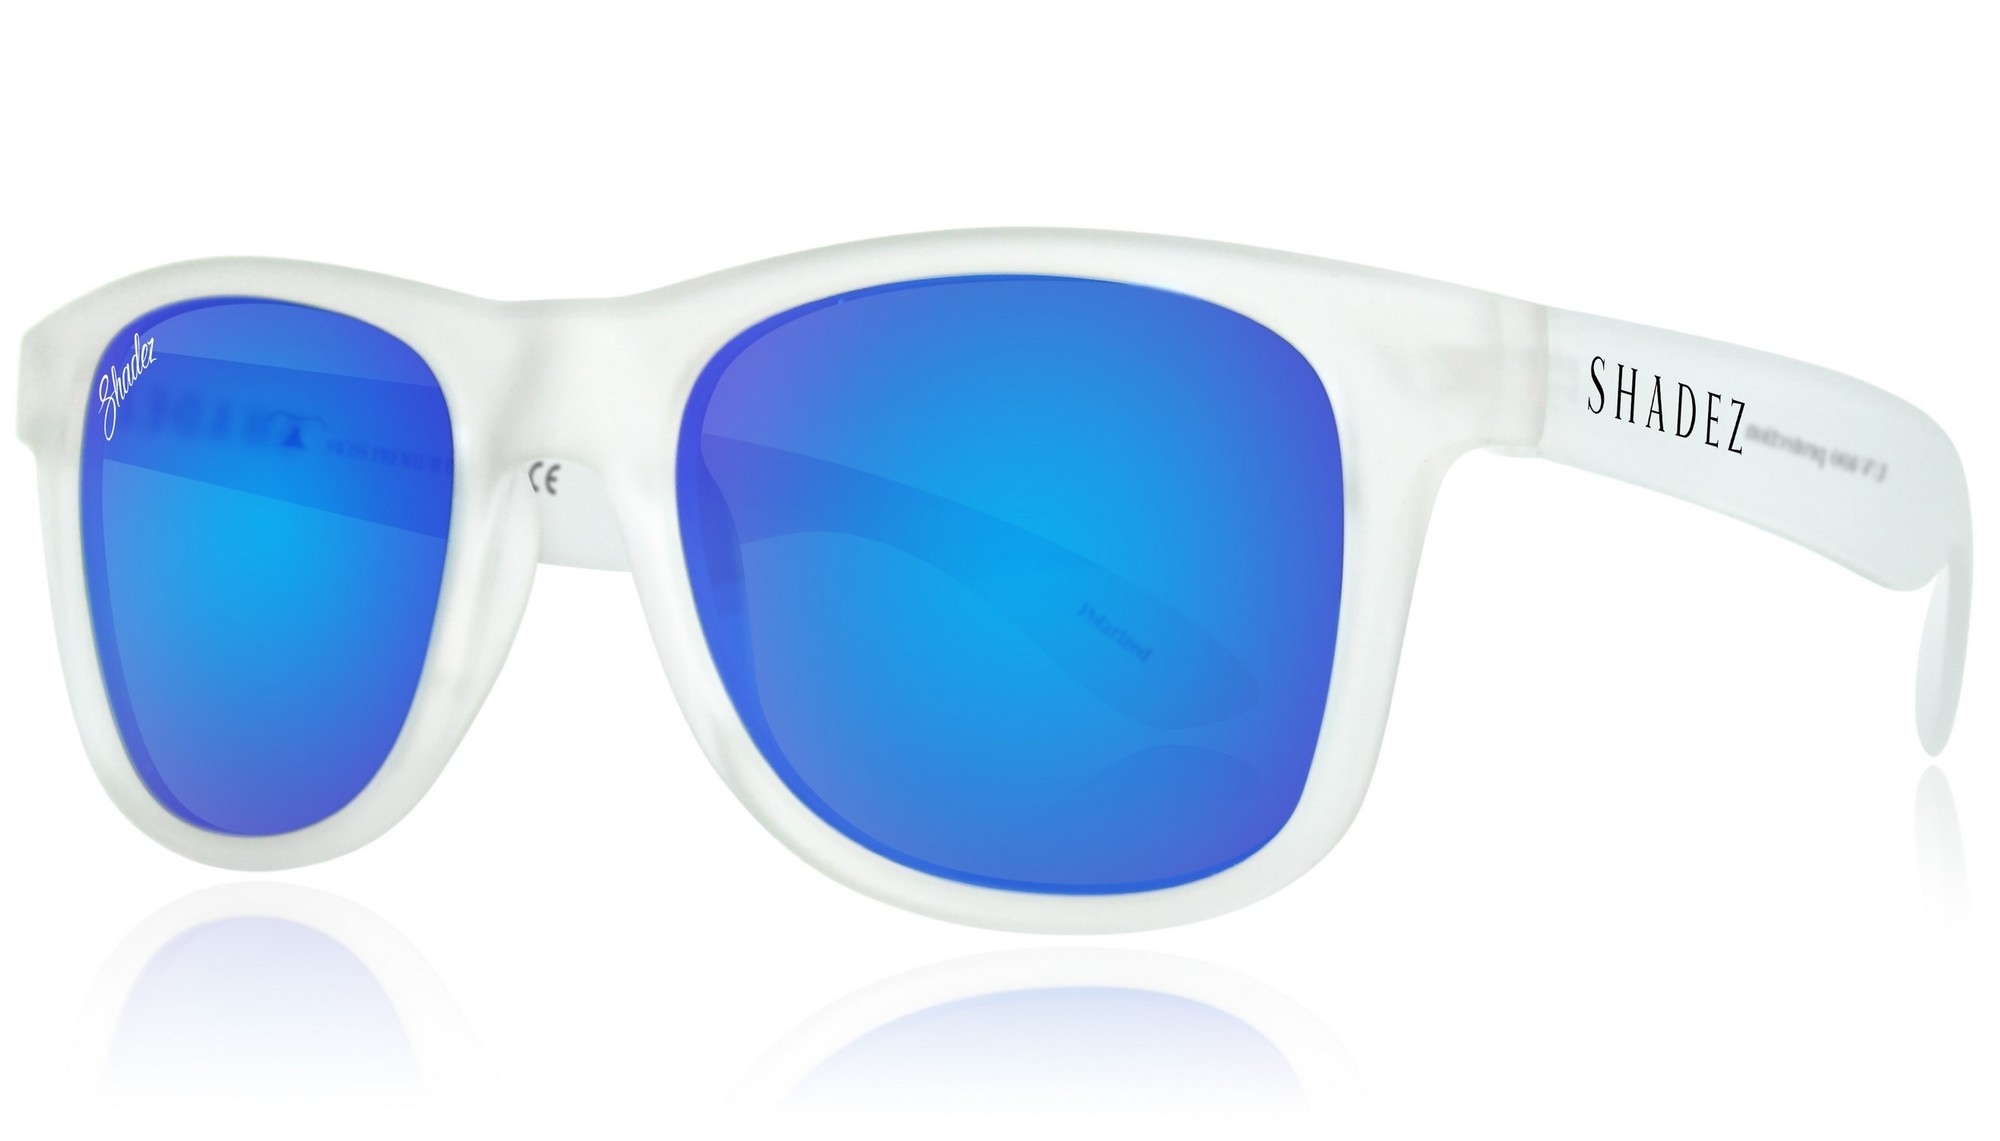 Shadez - polarized UV sunglasses for adults  - Transparent/Blue